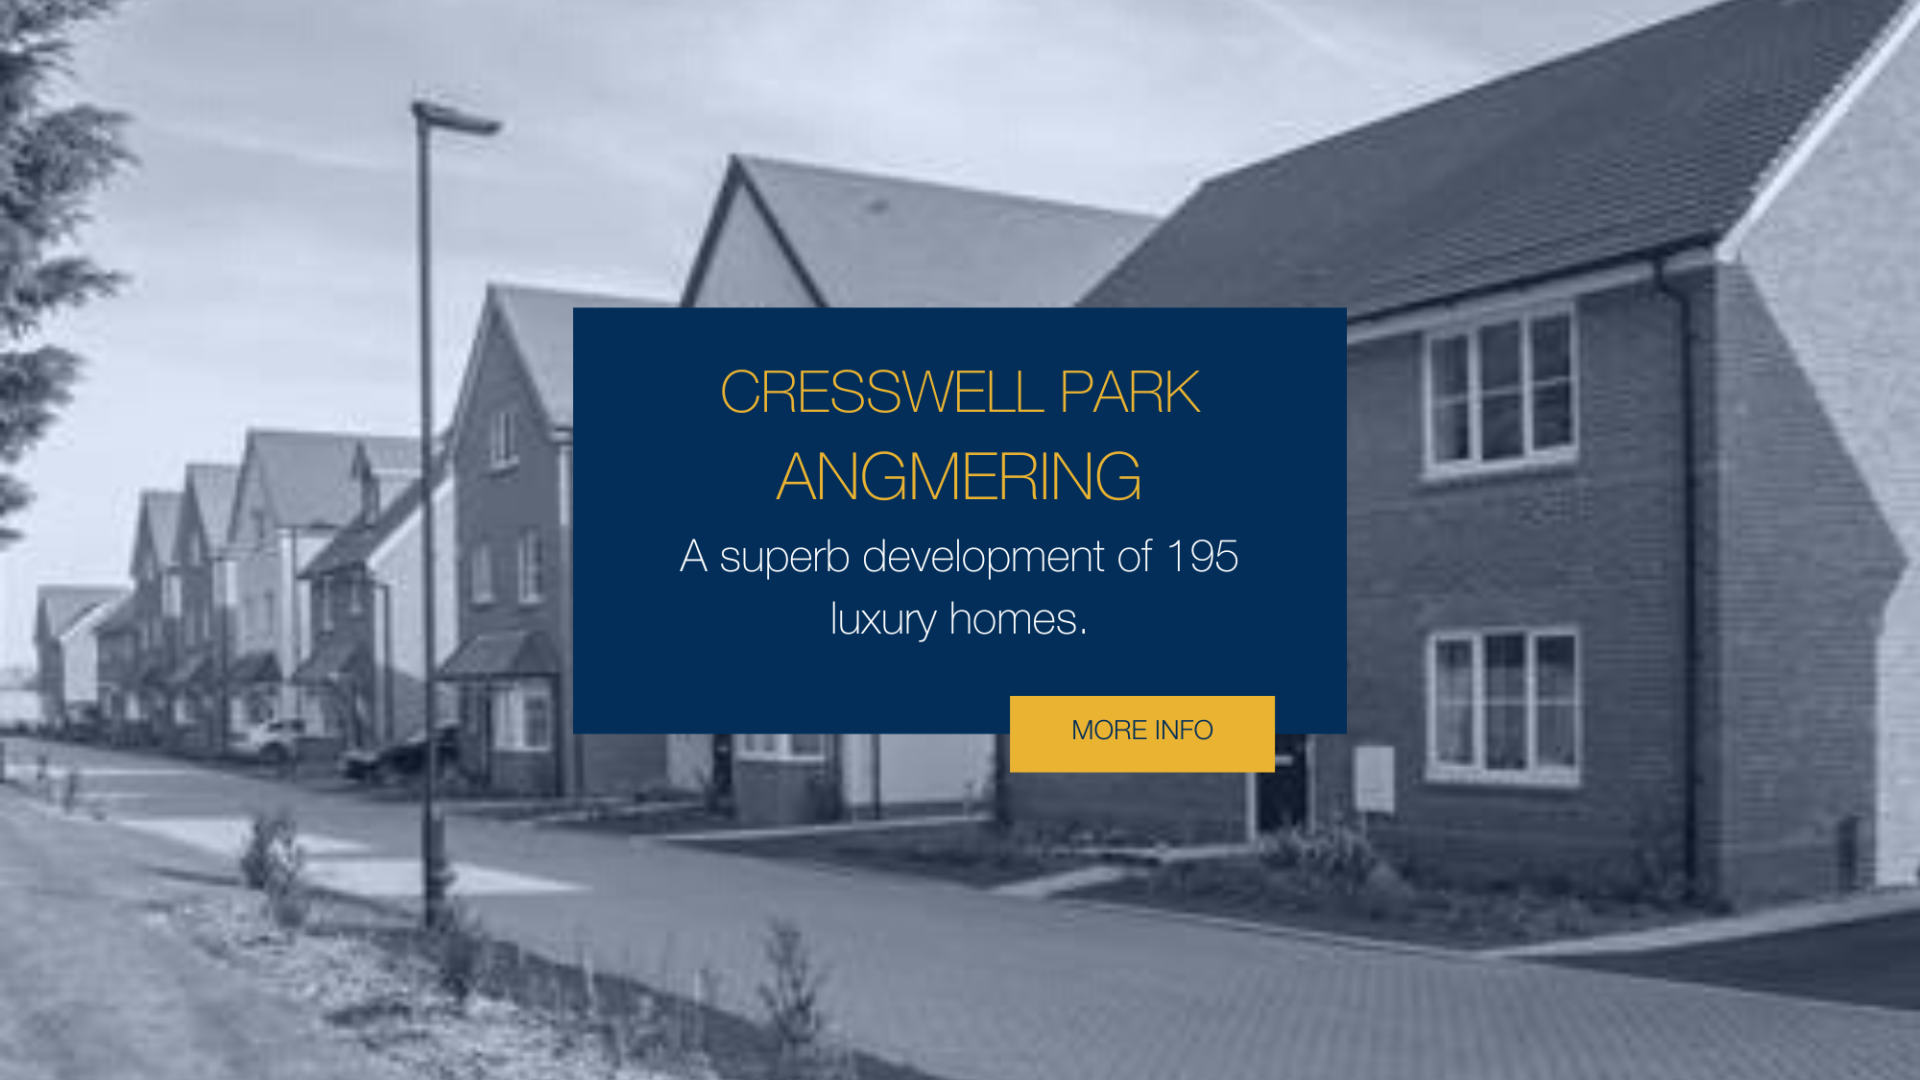 Cresswell Park - Angmering